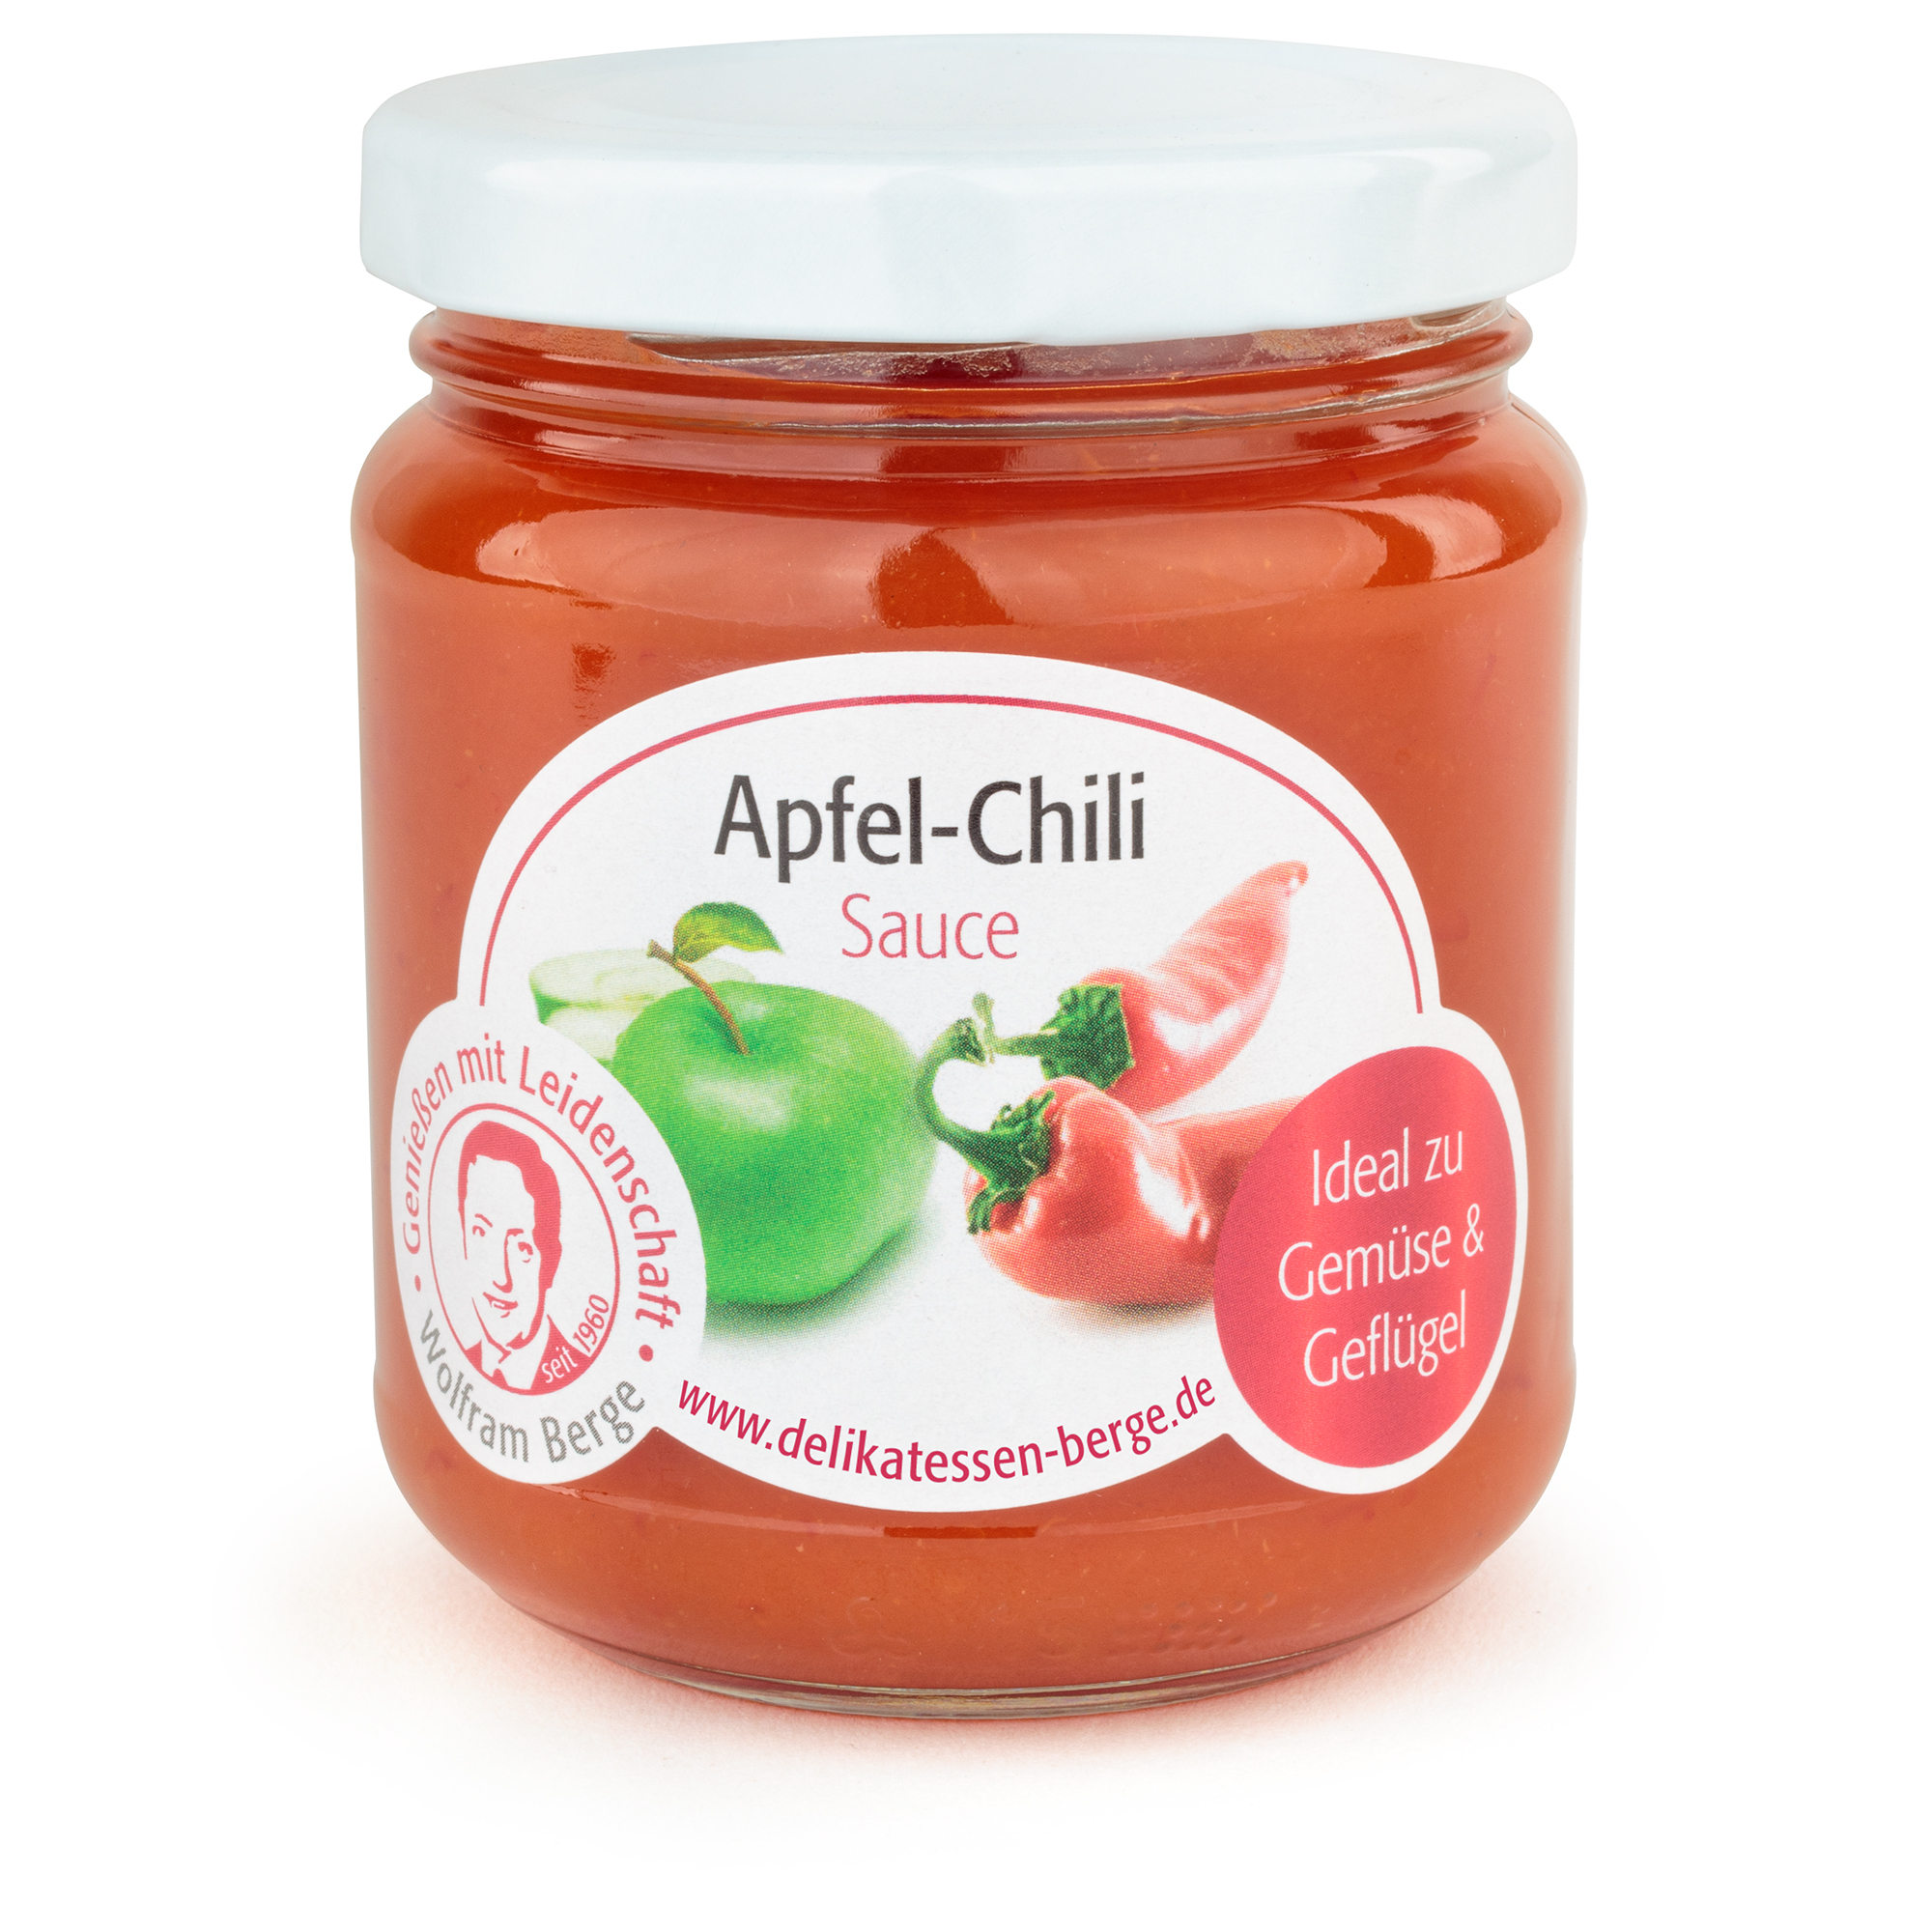 Apfel-Chili Sauce